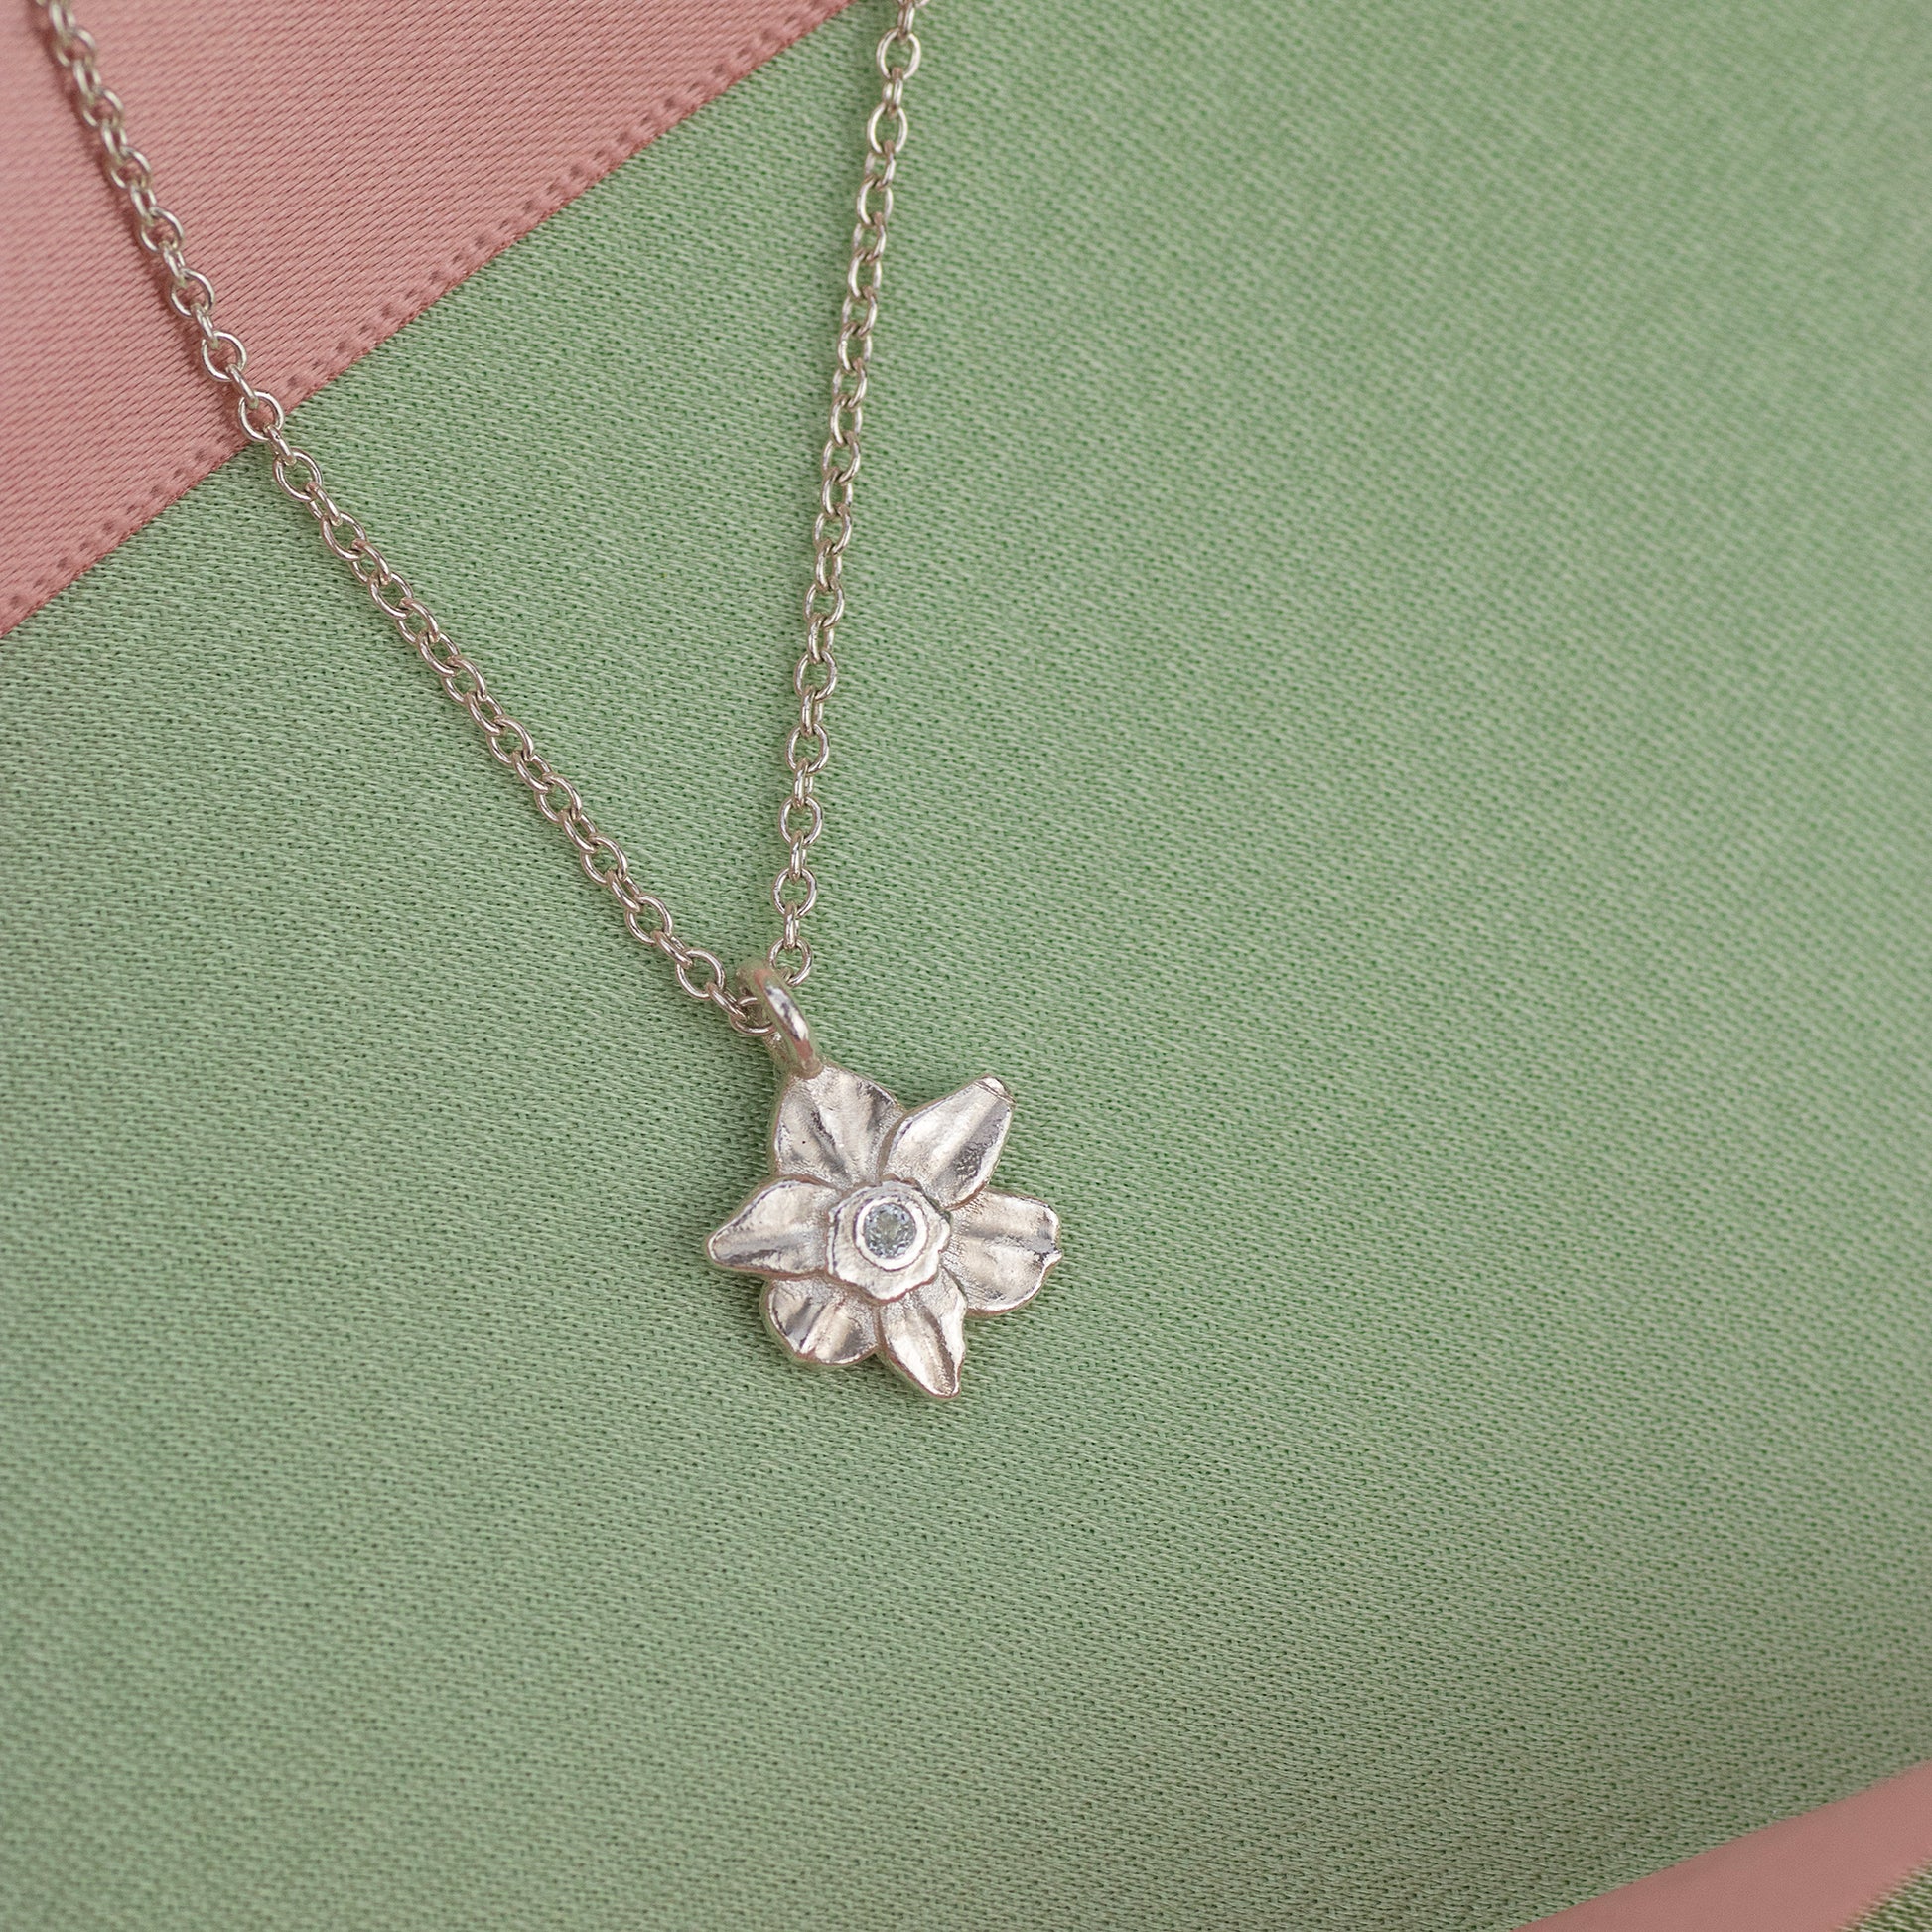 December Birth Flower & Birthstone Necklace - Daffodil & Blue Topaz - Silver